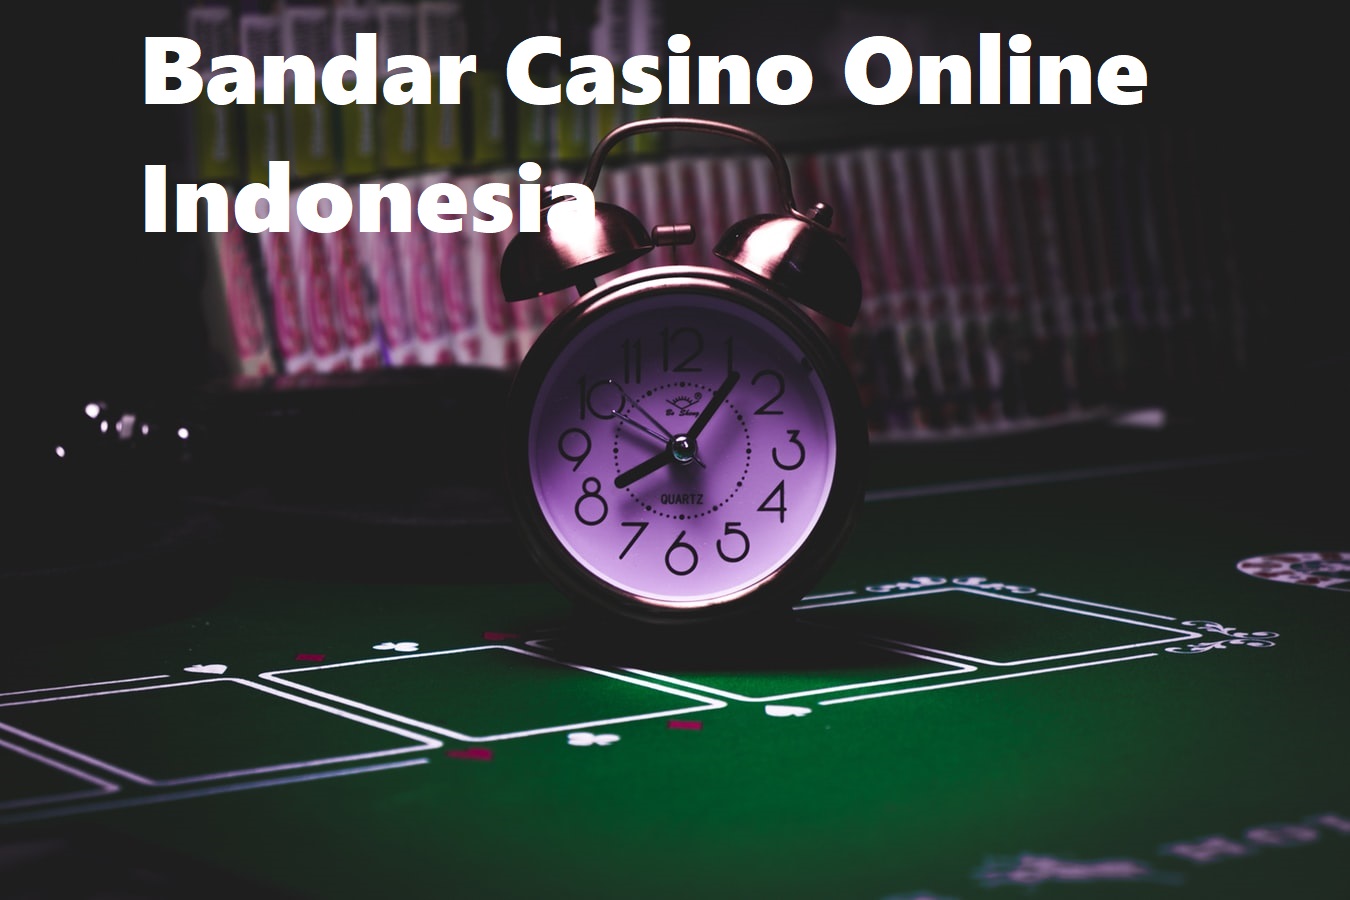 Bandar Casino Online Indonesia